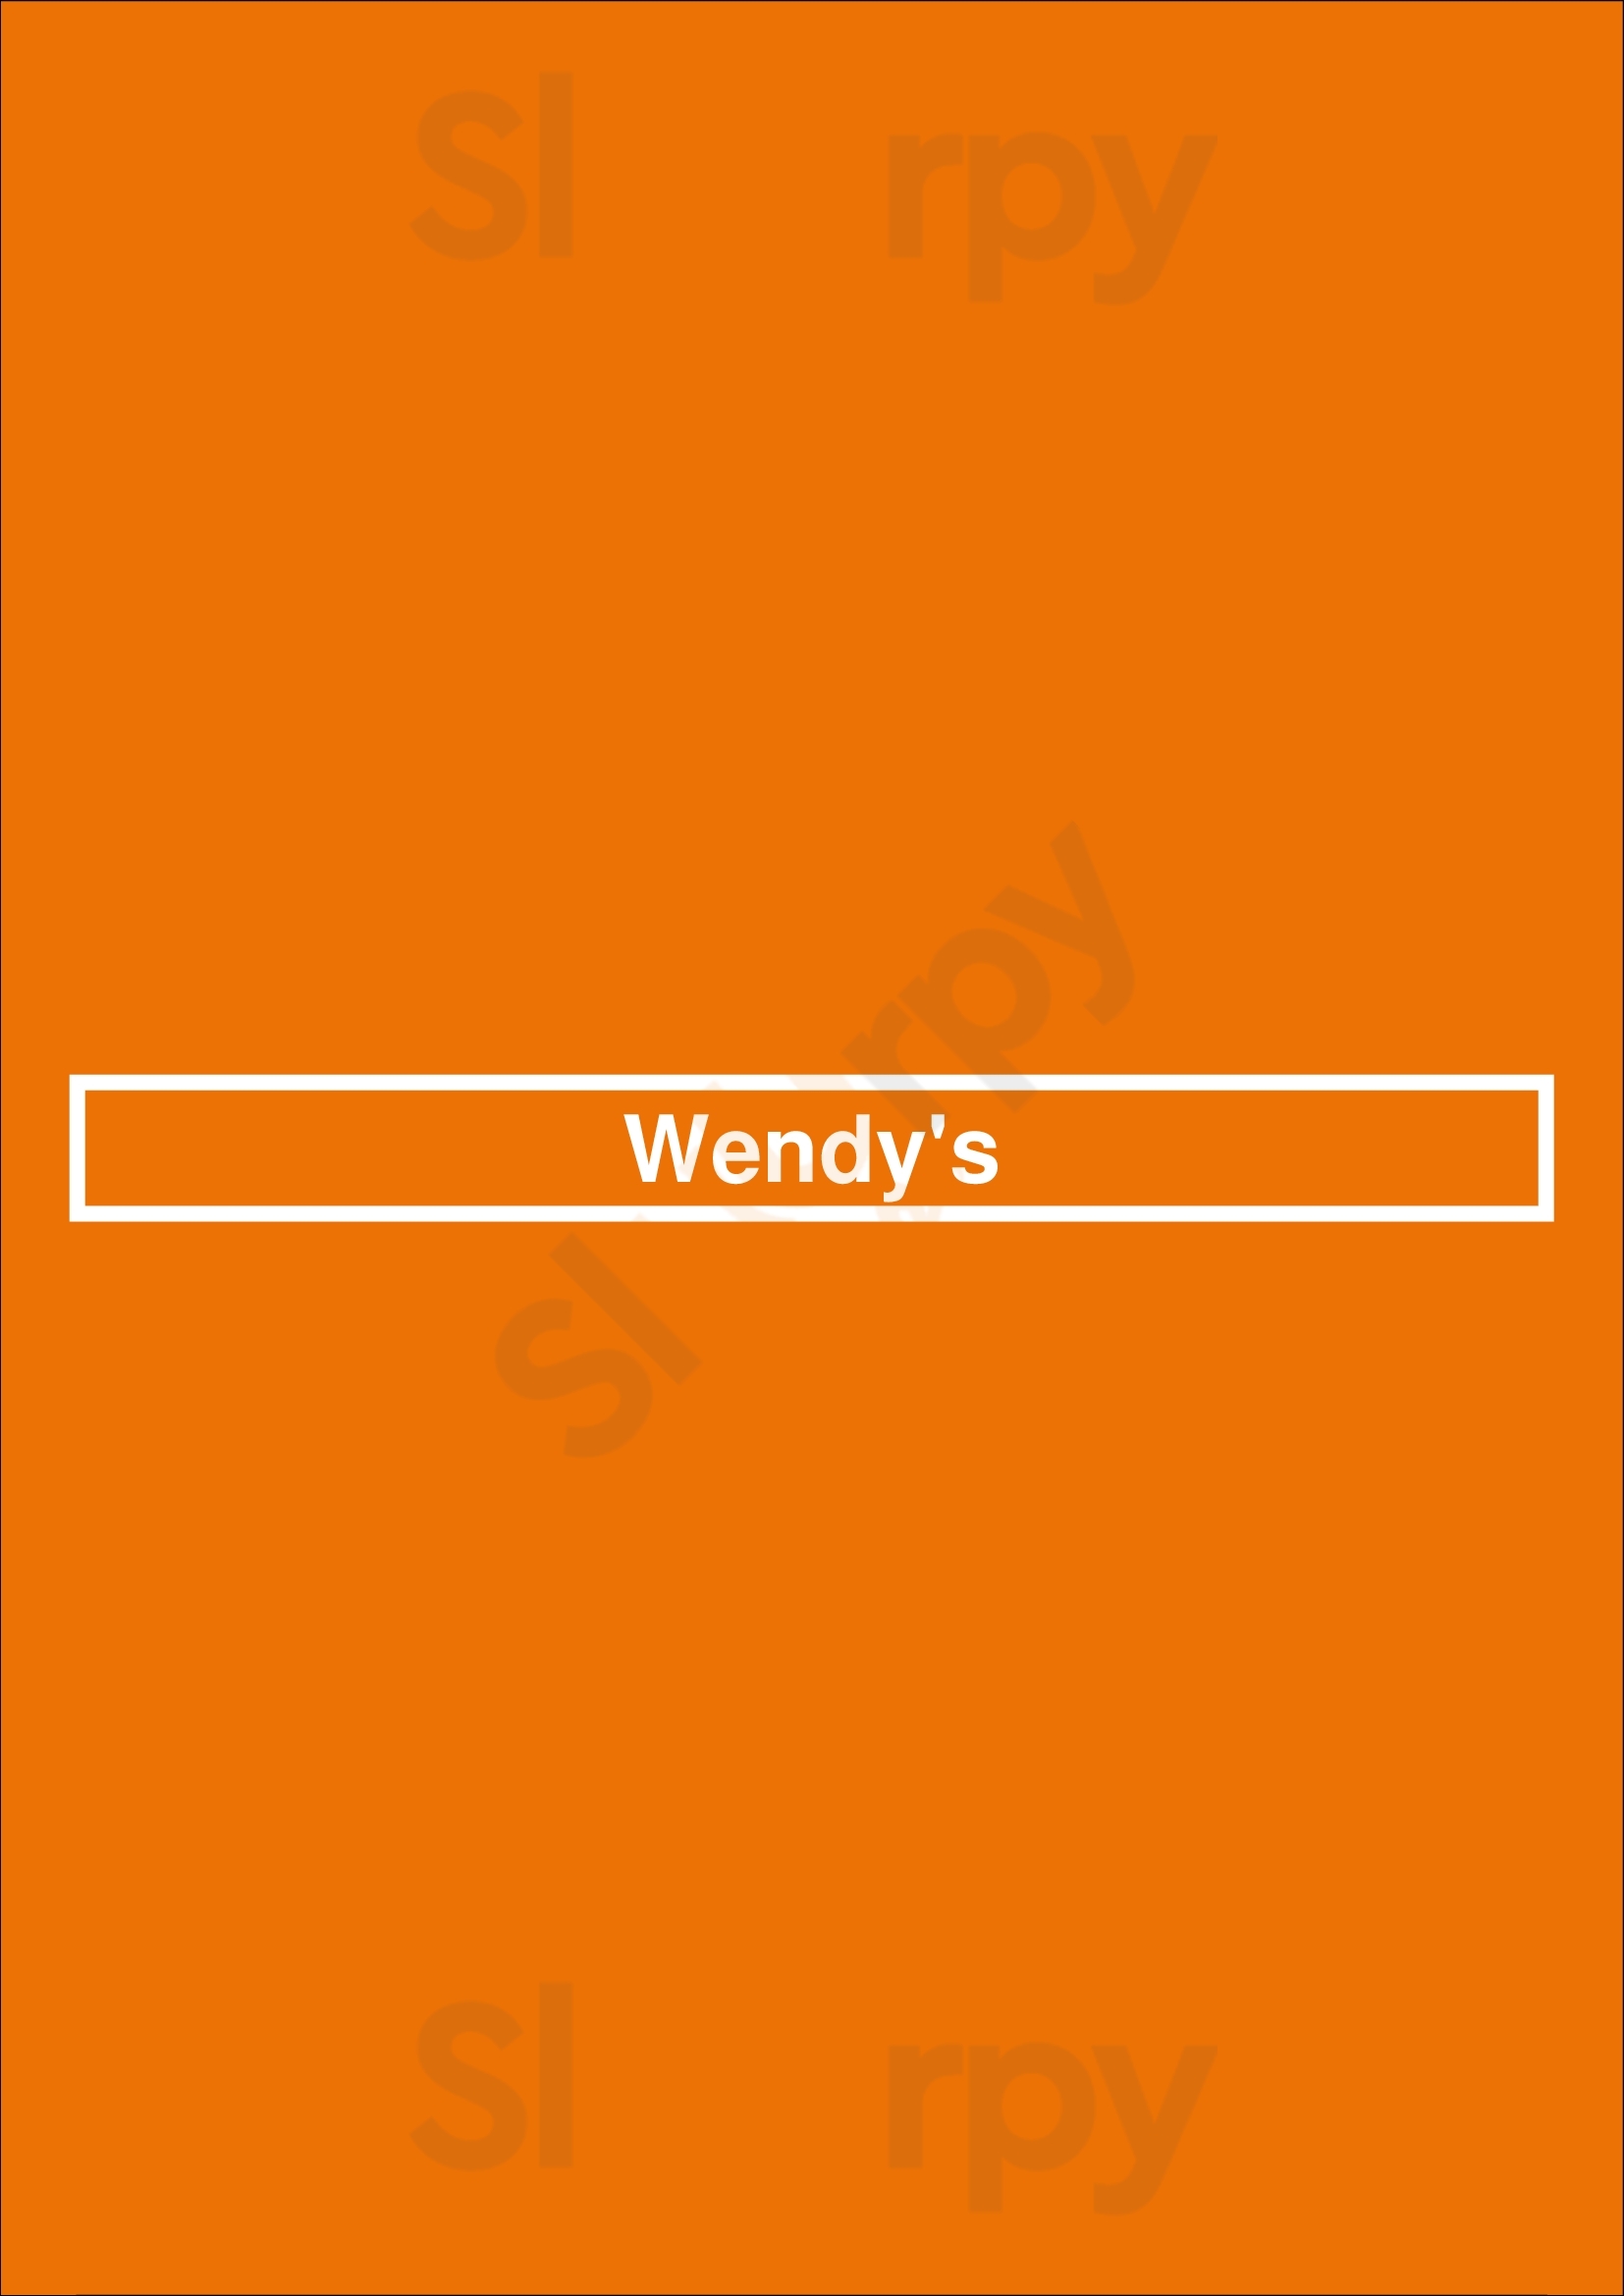 Wendy's Ormond Beach Menu - 1